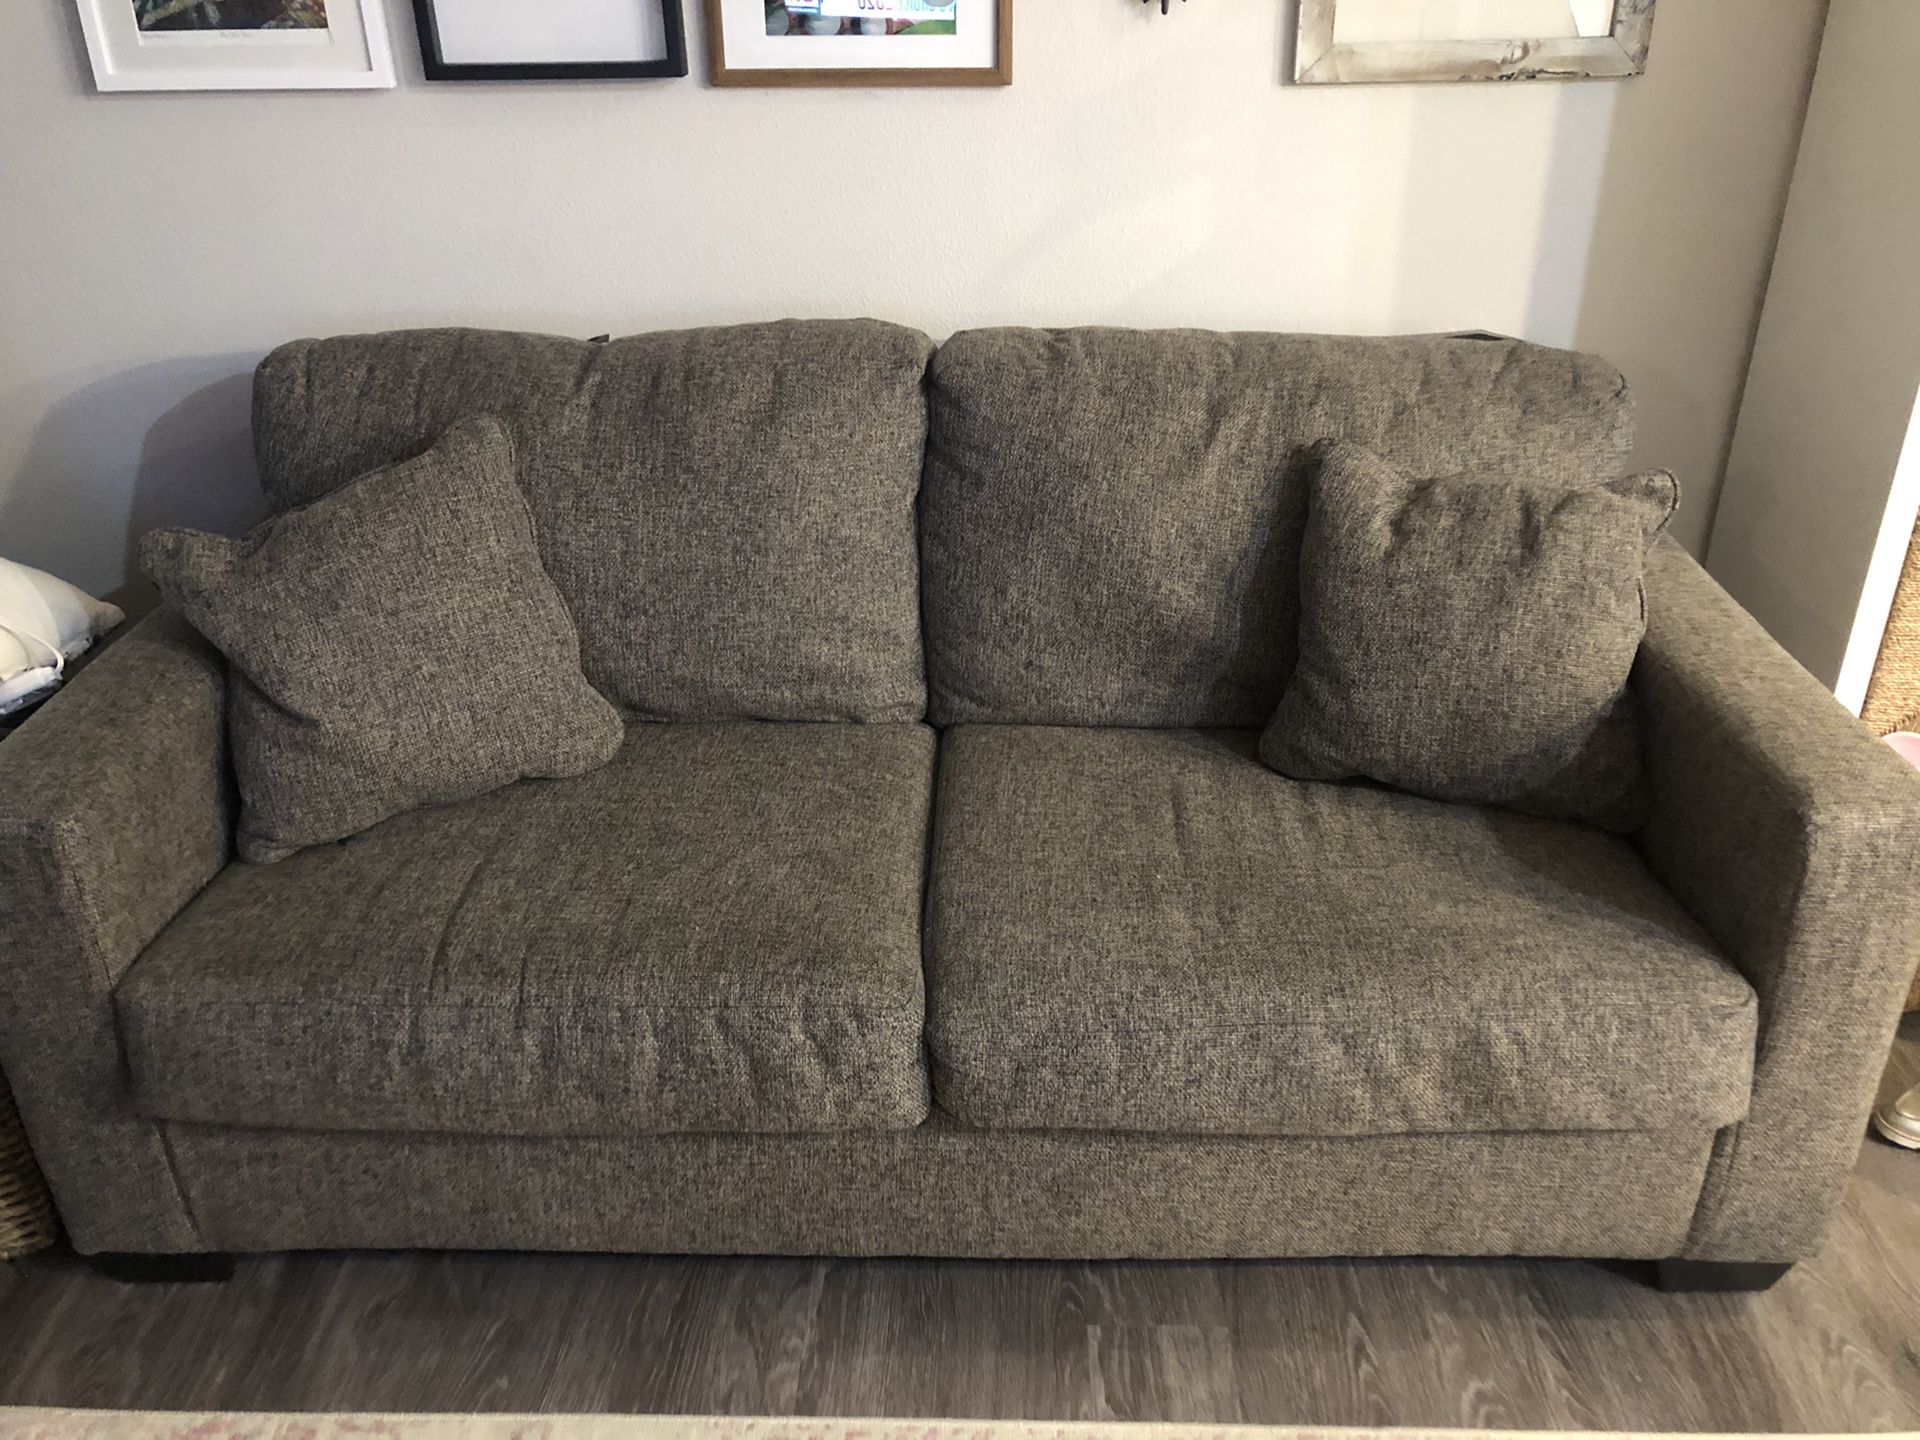 Sofa - Ashley Furniture Home Store - Wichita, KS - Navy, gray textured couch